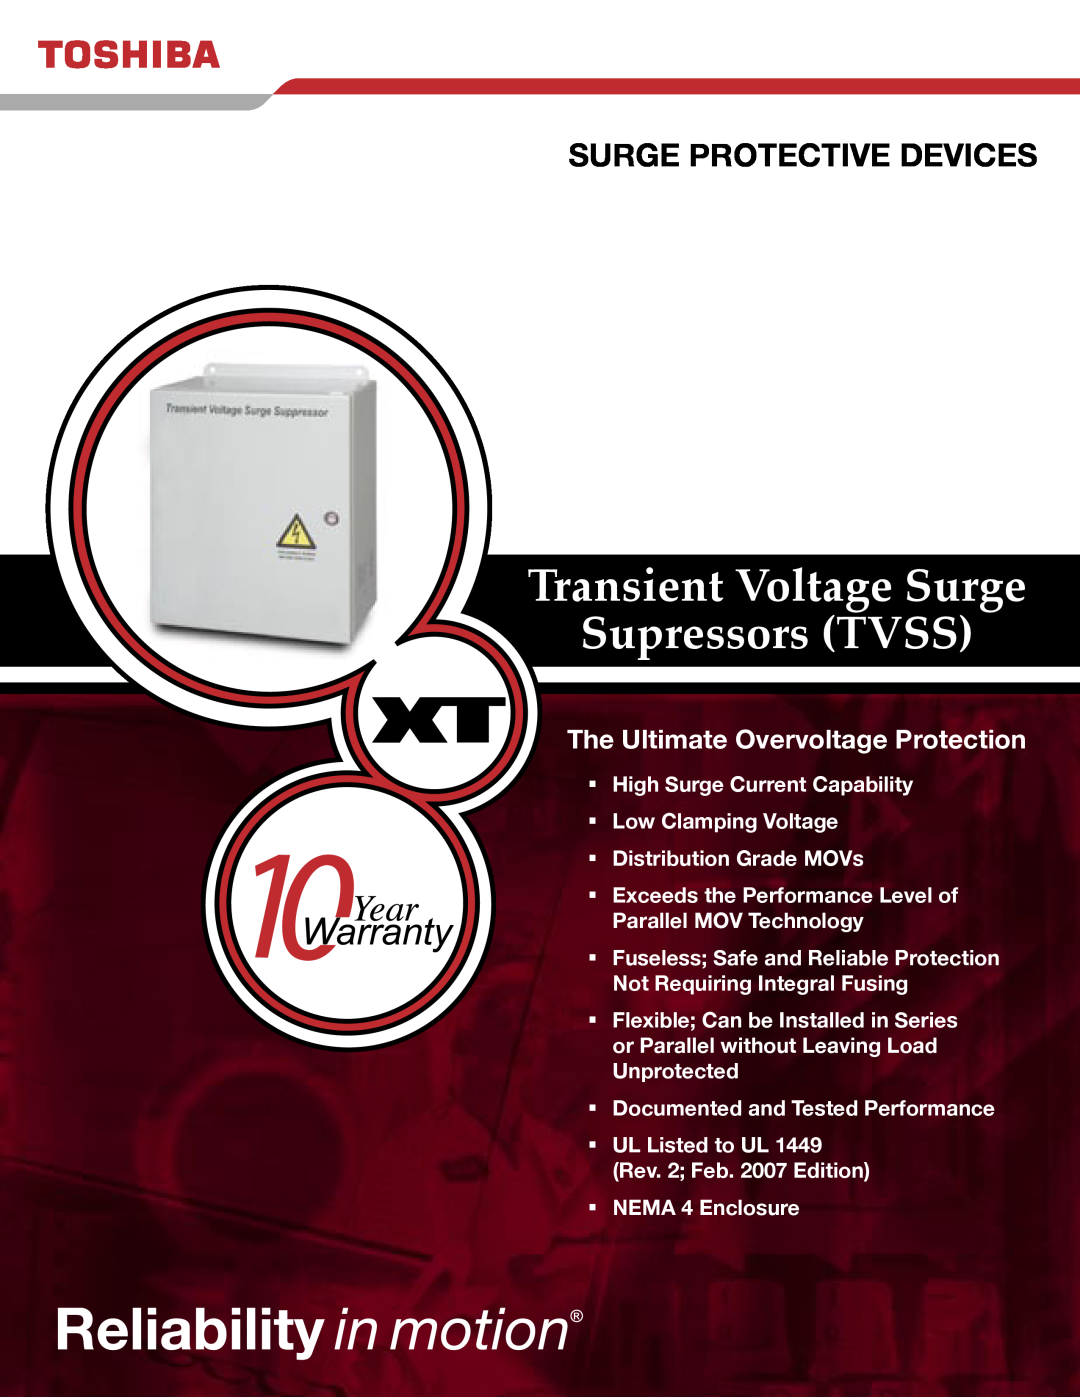 Toshiba TVS-XT140-277, TVS-XT140-120 manual Transient Voltage Surge Supressors TVSS, Surge Protective Devices 